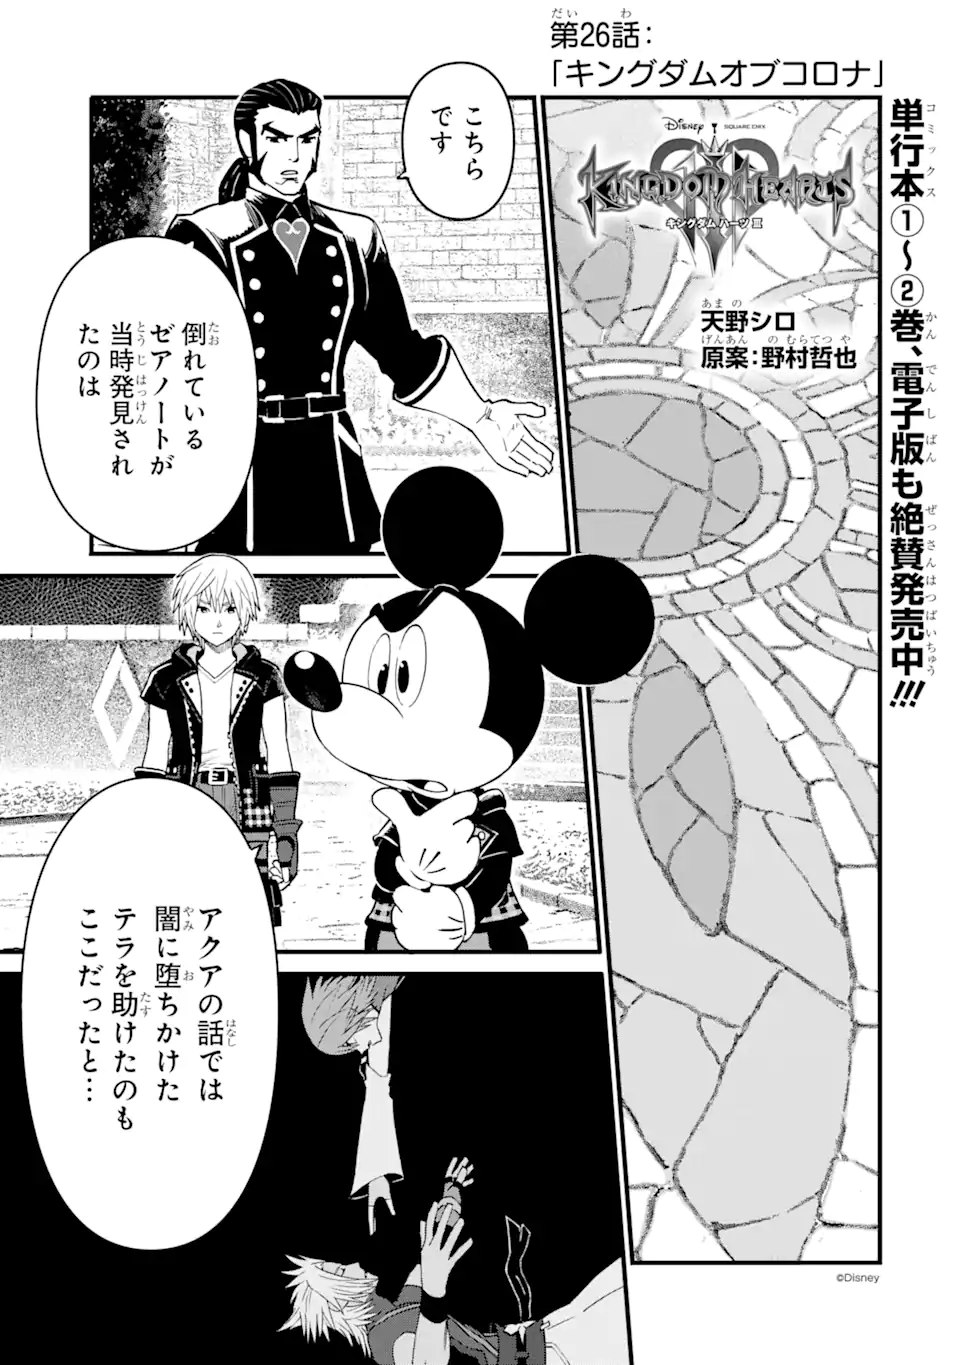 Kingdom Hearts III - Chapter 26 - Page 1